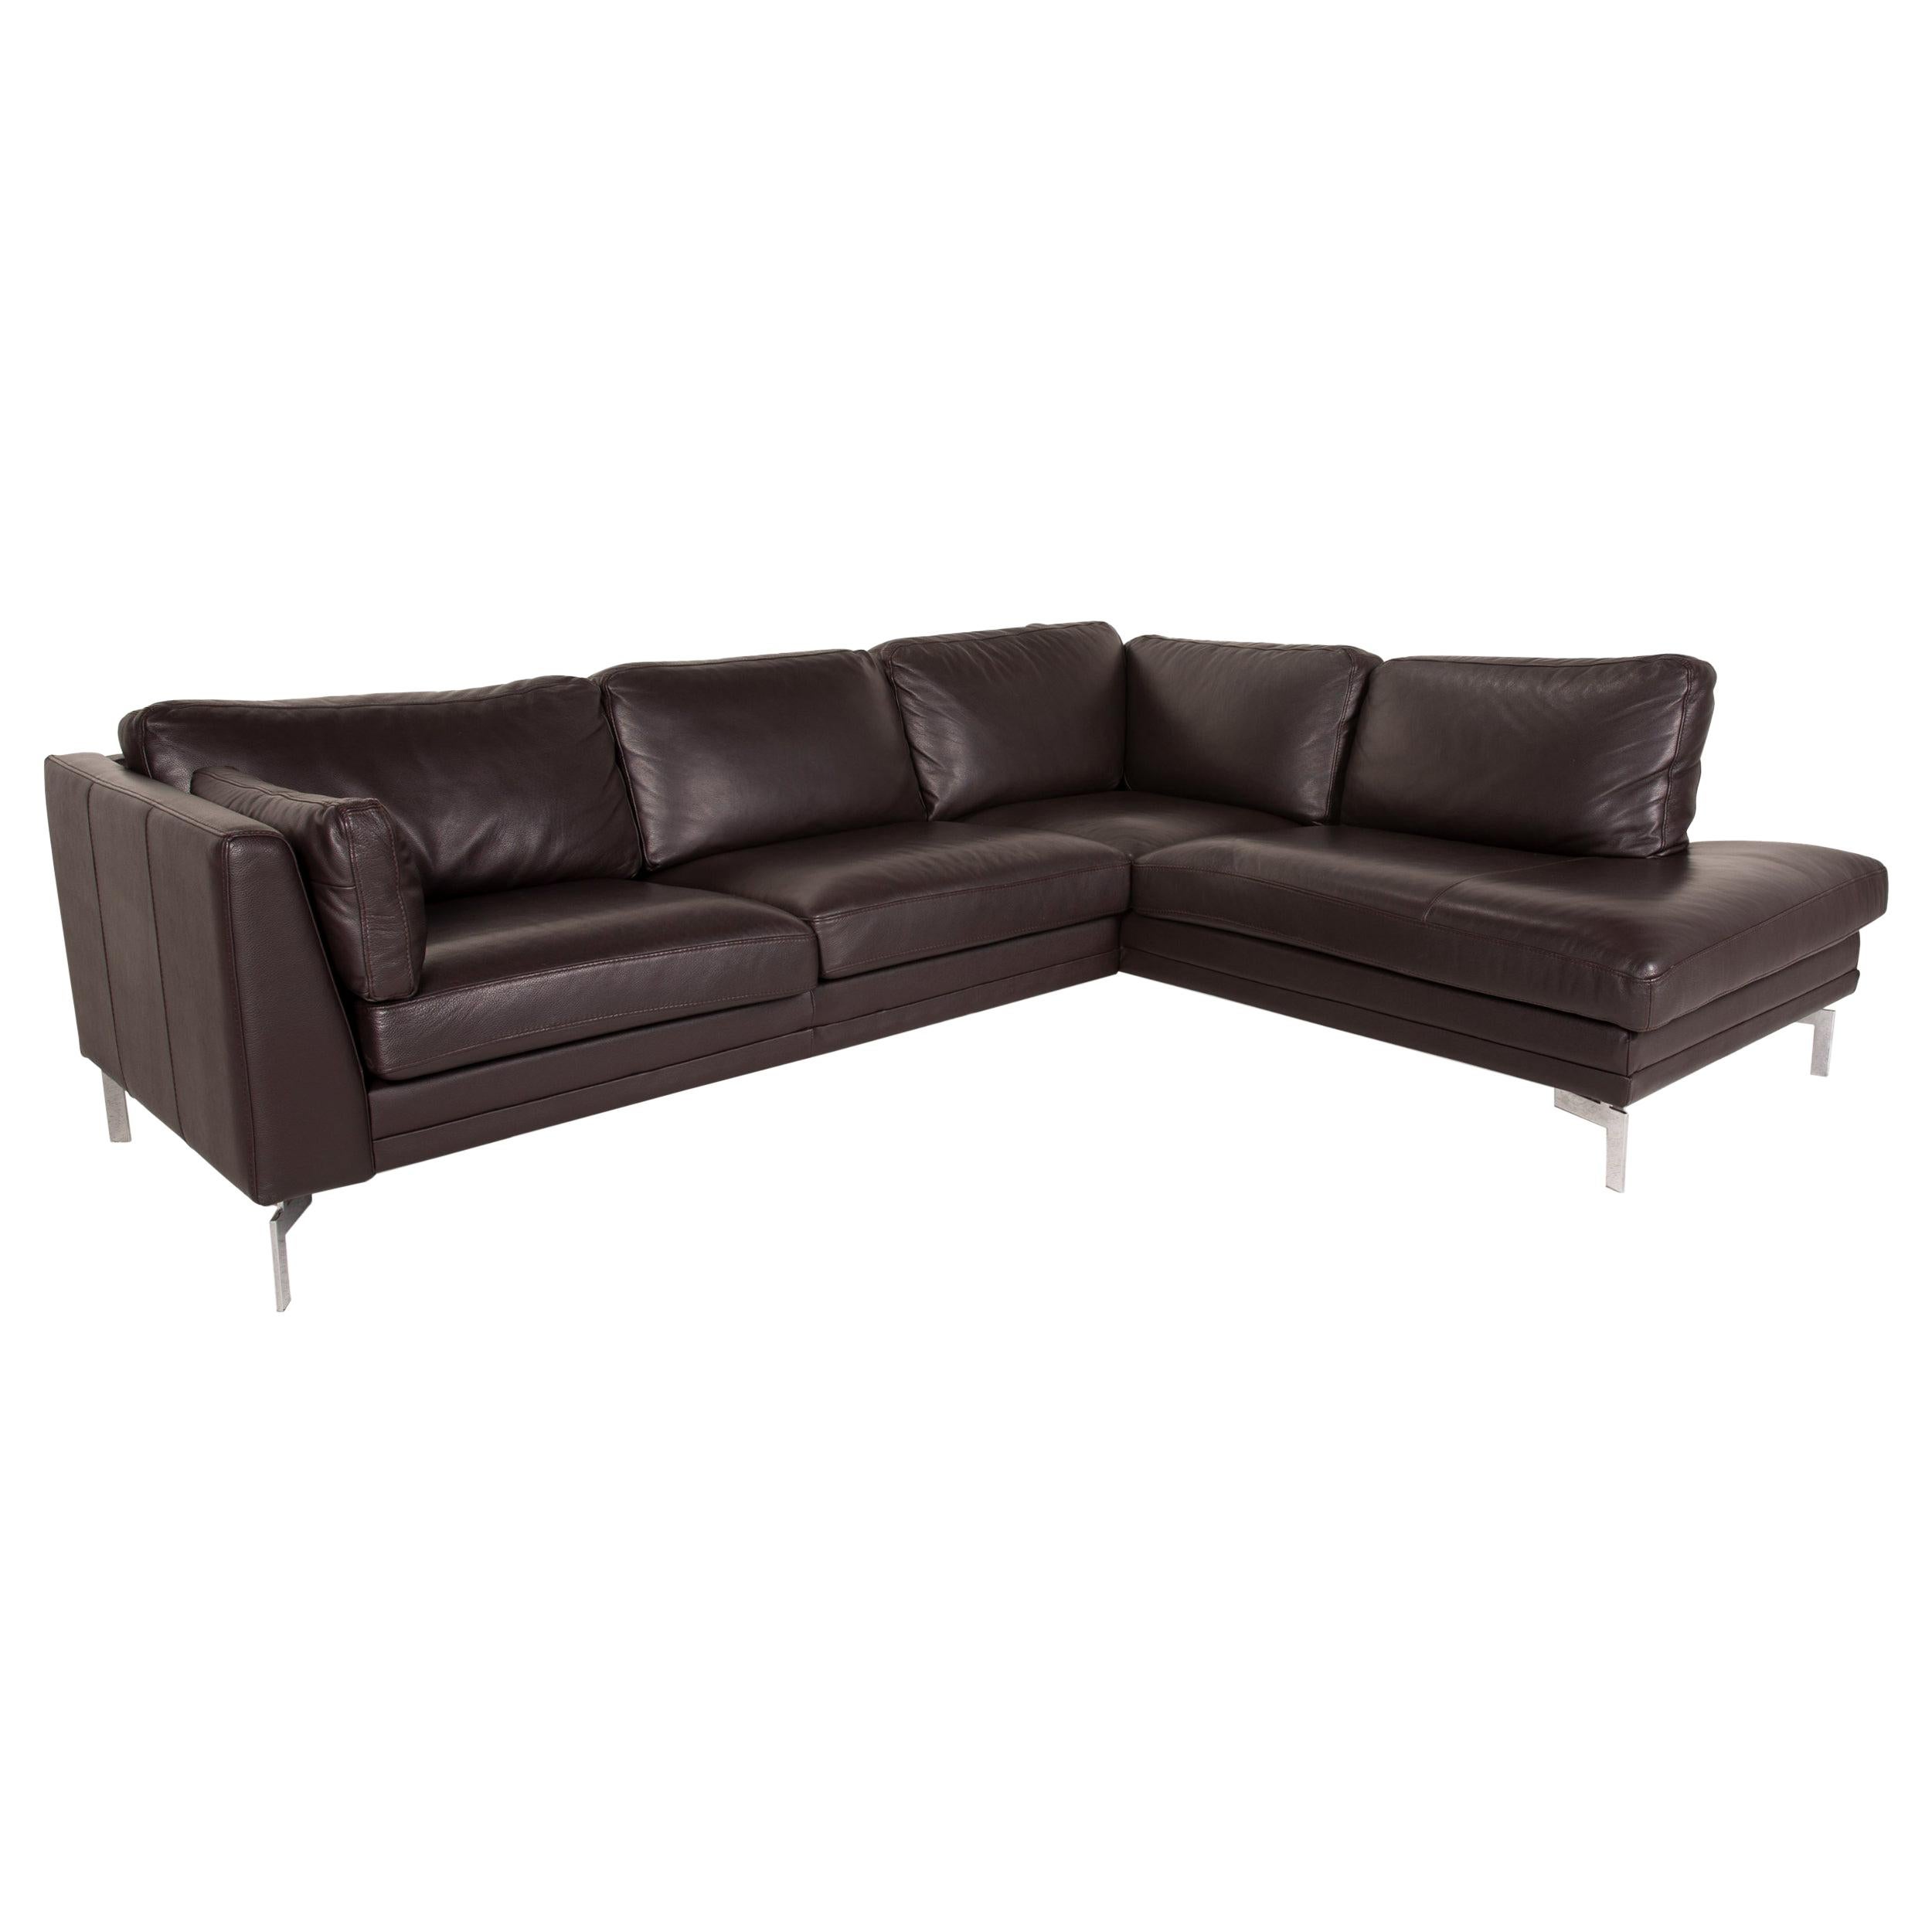 Furninova leather sofa dark brown corner sofa couch For Sale